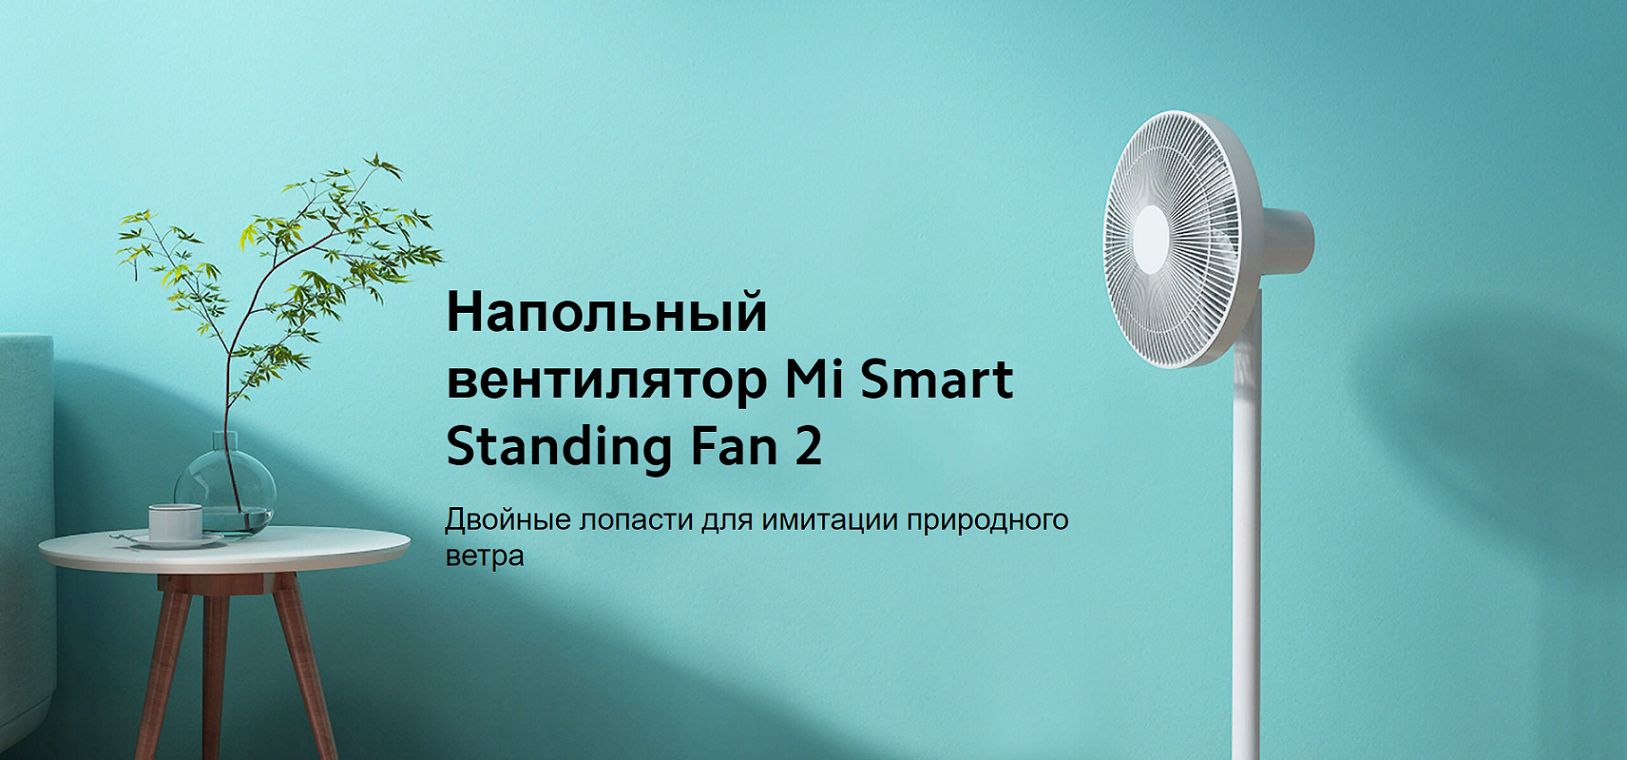 Xiaomi smart standing. Напольный вентилятор mi Smart standing Fan 2. Xiaomi mi Smart standing Fan 2 eu bplds02dm (bhr4828gl). Напольный вентилятор Xiaomi mi Smart standing Fan 2 Lite, белый. Напольный вентилятор Xiaomi mi Smart standing Fan 2 eu bplds02dm (bhr4828gl) Rus.